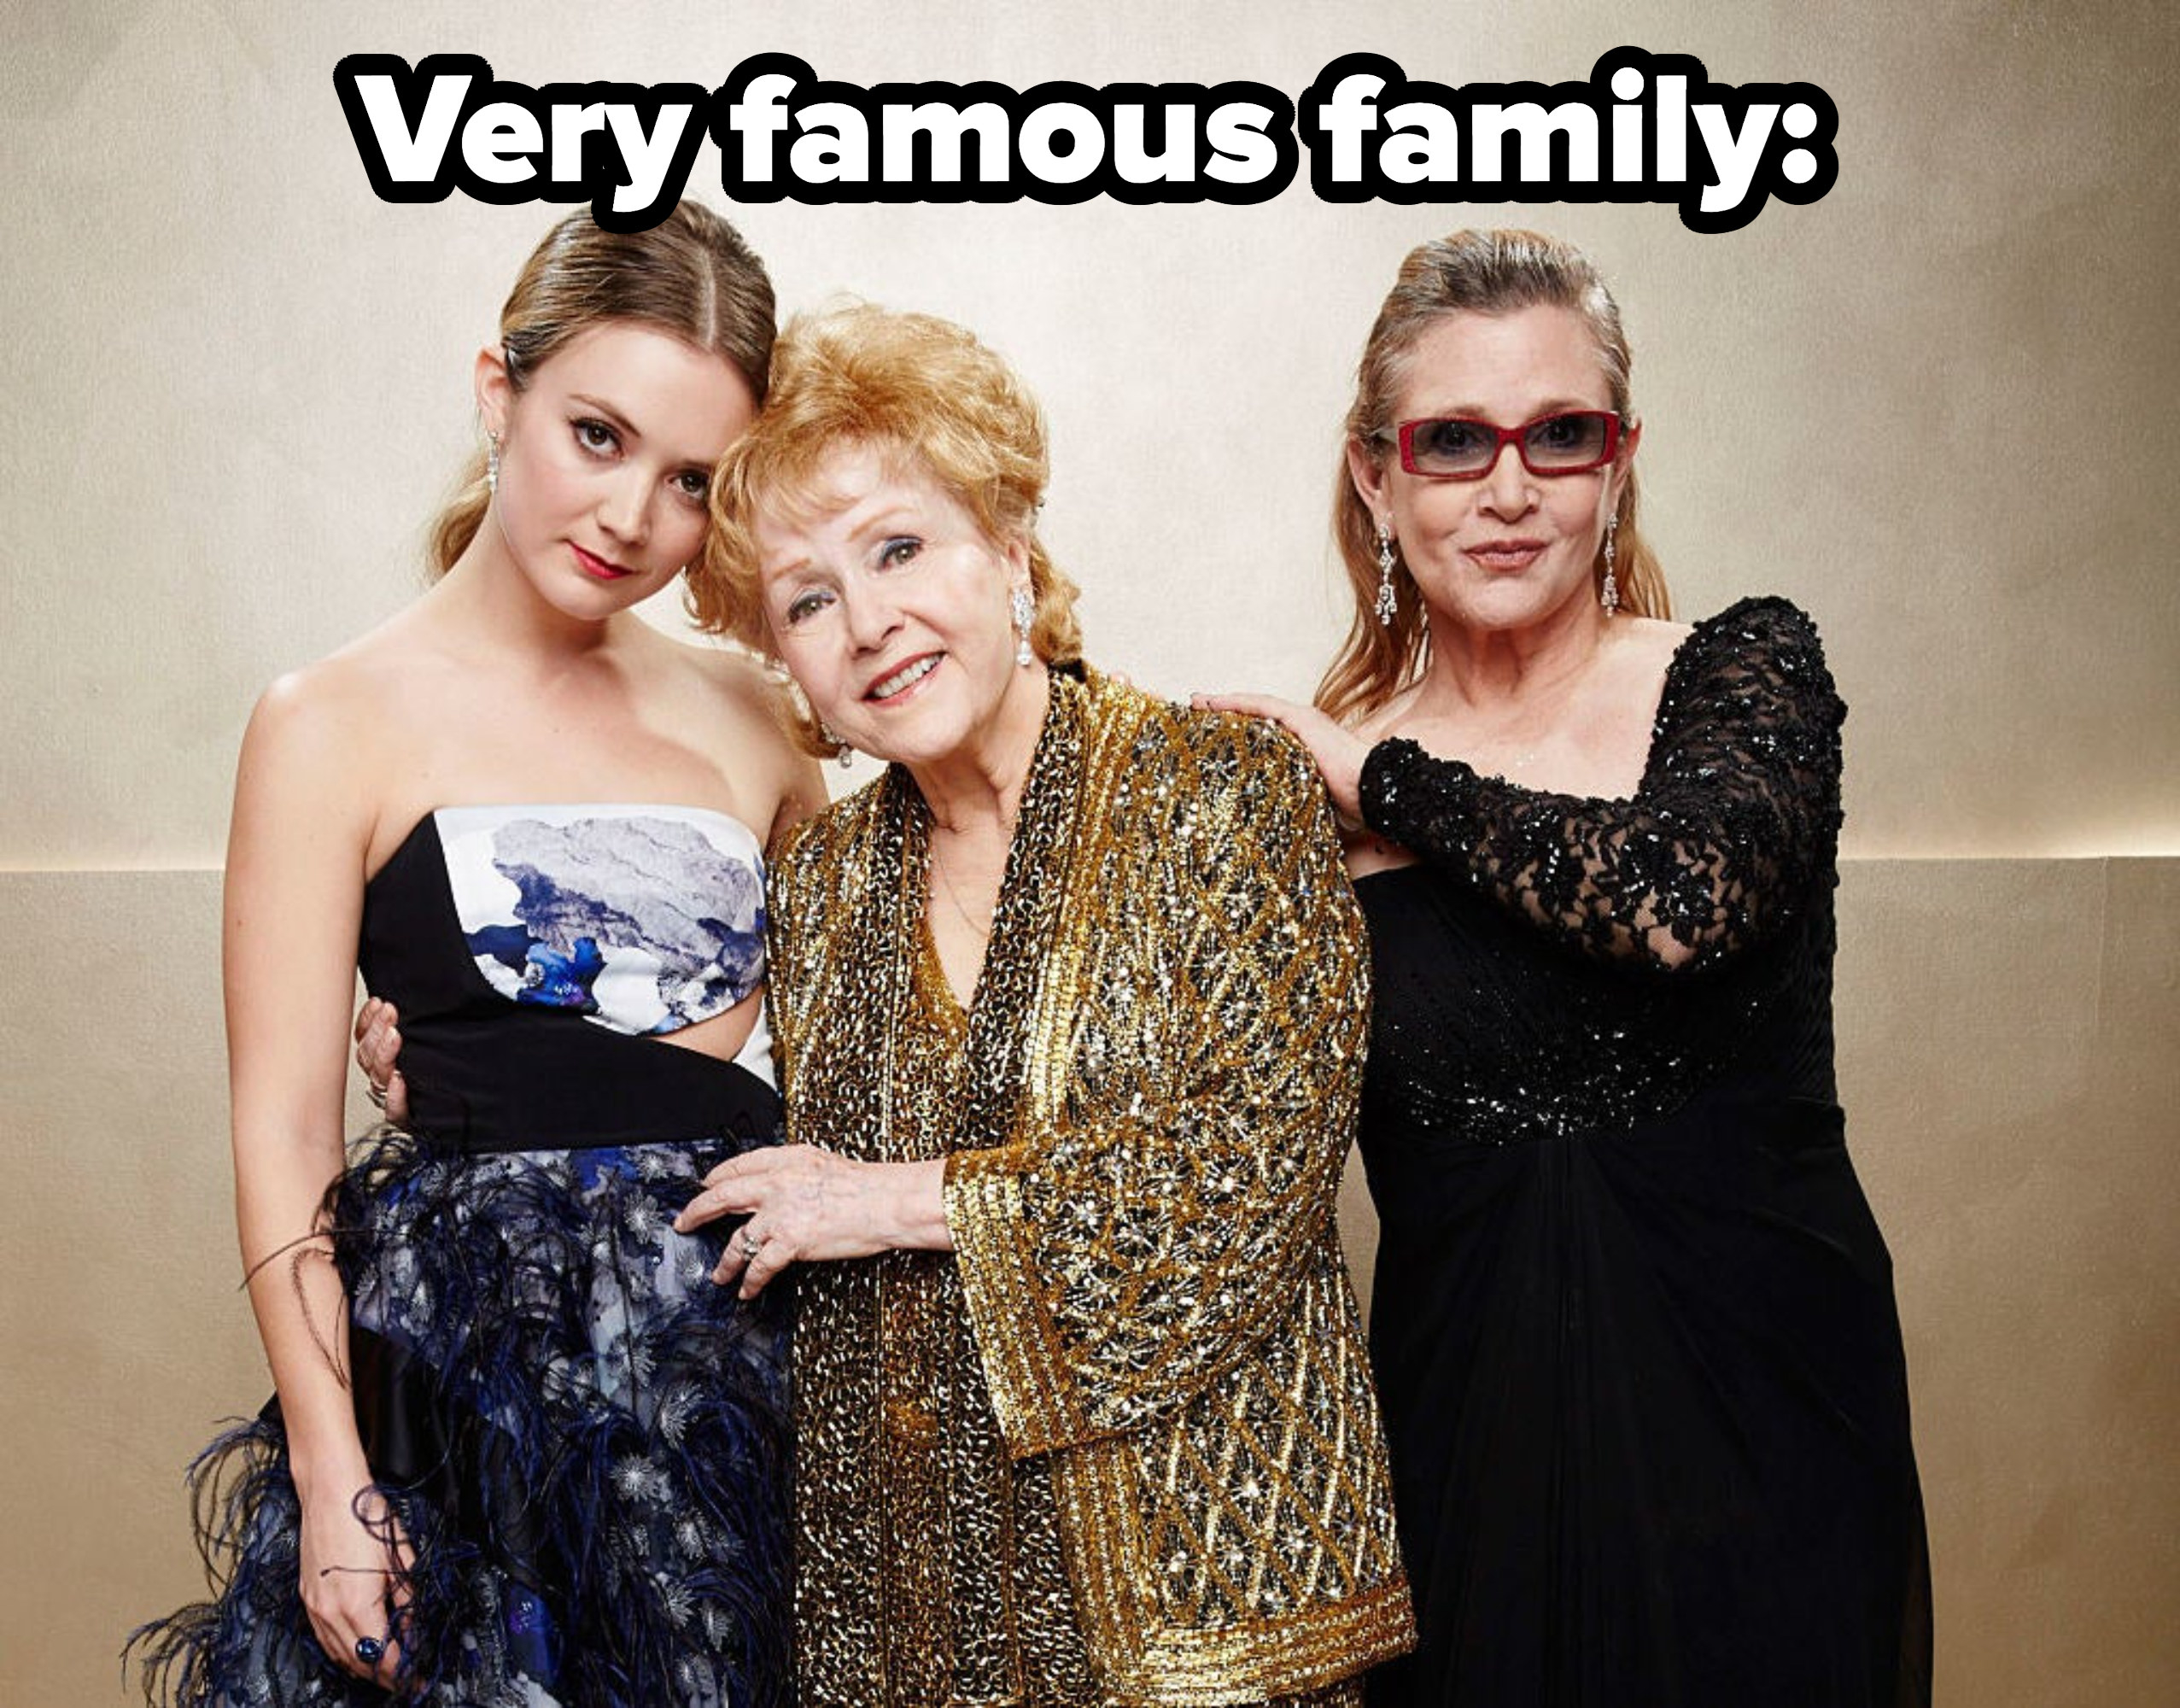 Billie Lourd, Carrie Fisher and Debbie Reynolds posing together